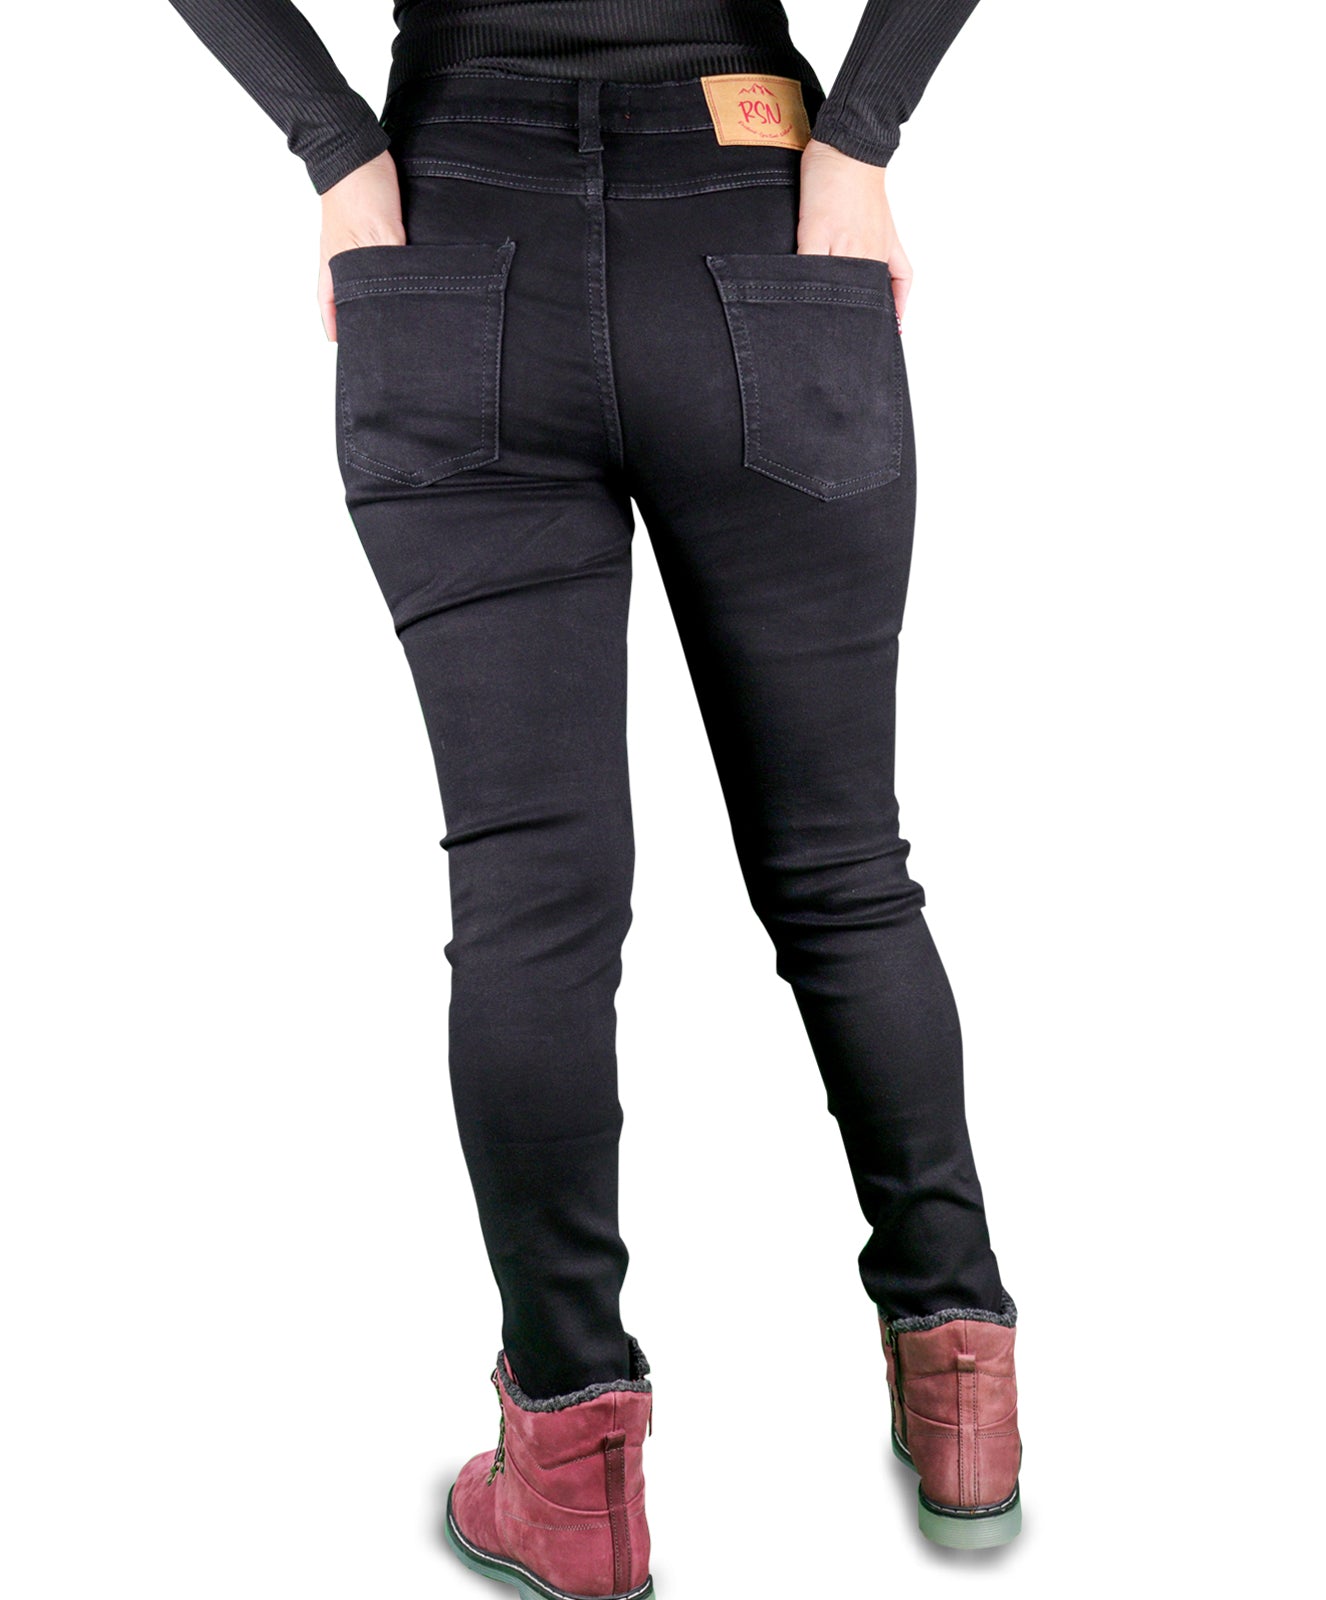 Buy online Black Cotton Jeggings from Jeans & jeggings for Women